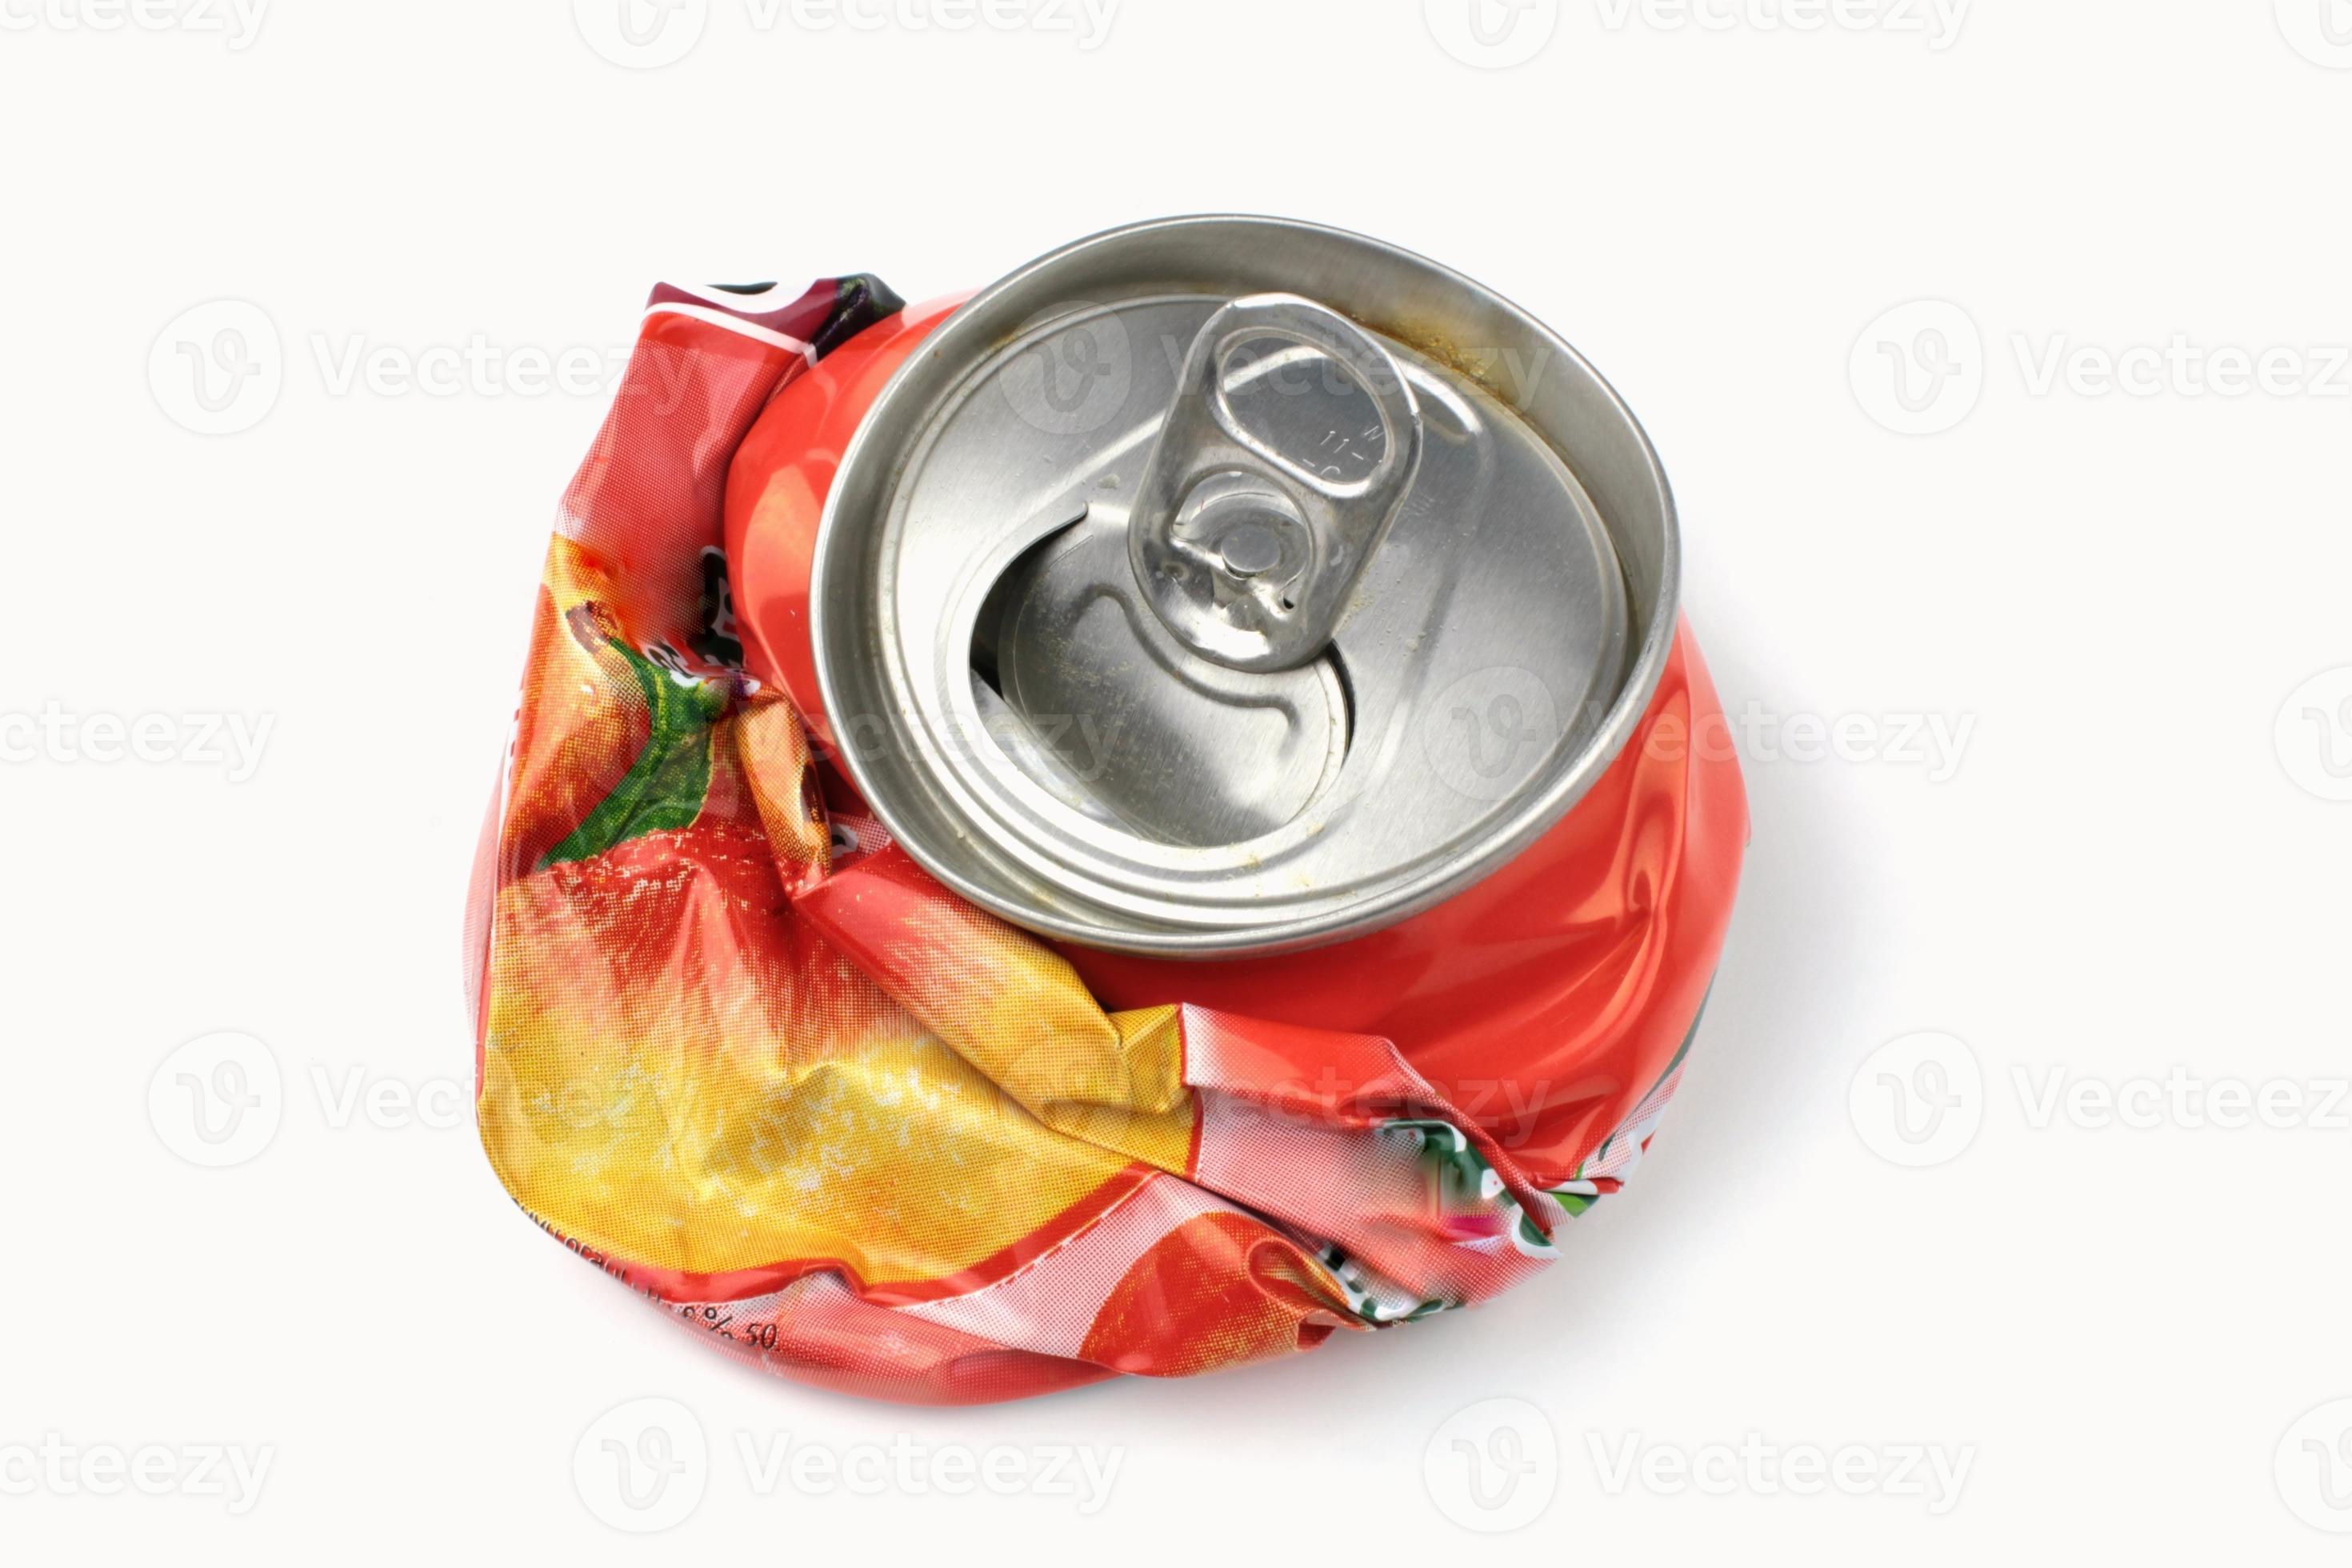 smashed soda can